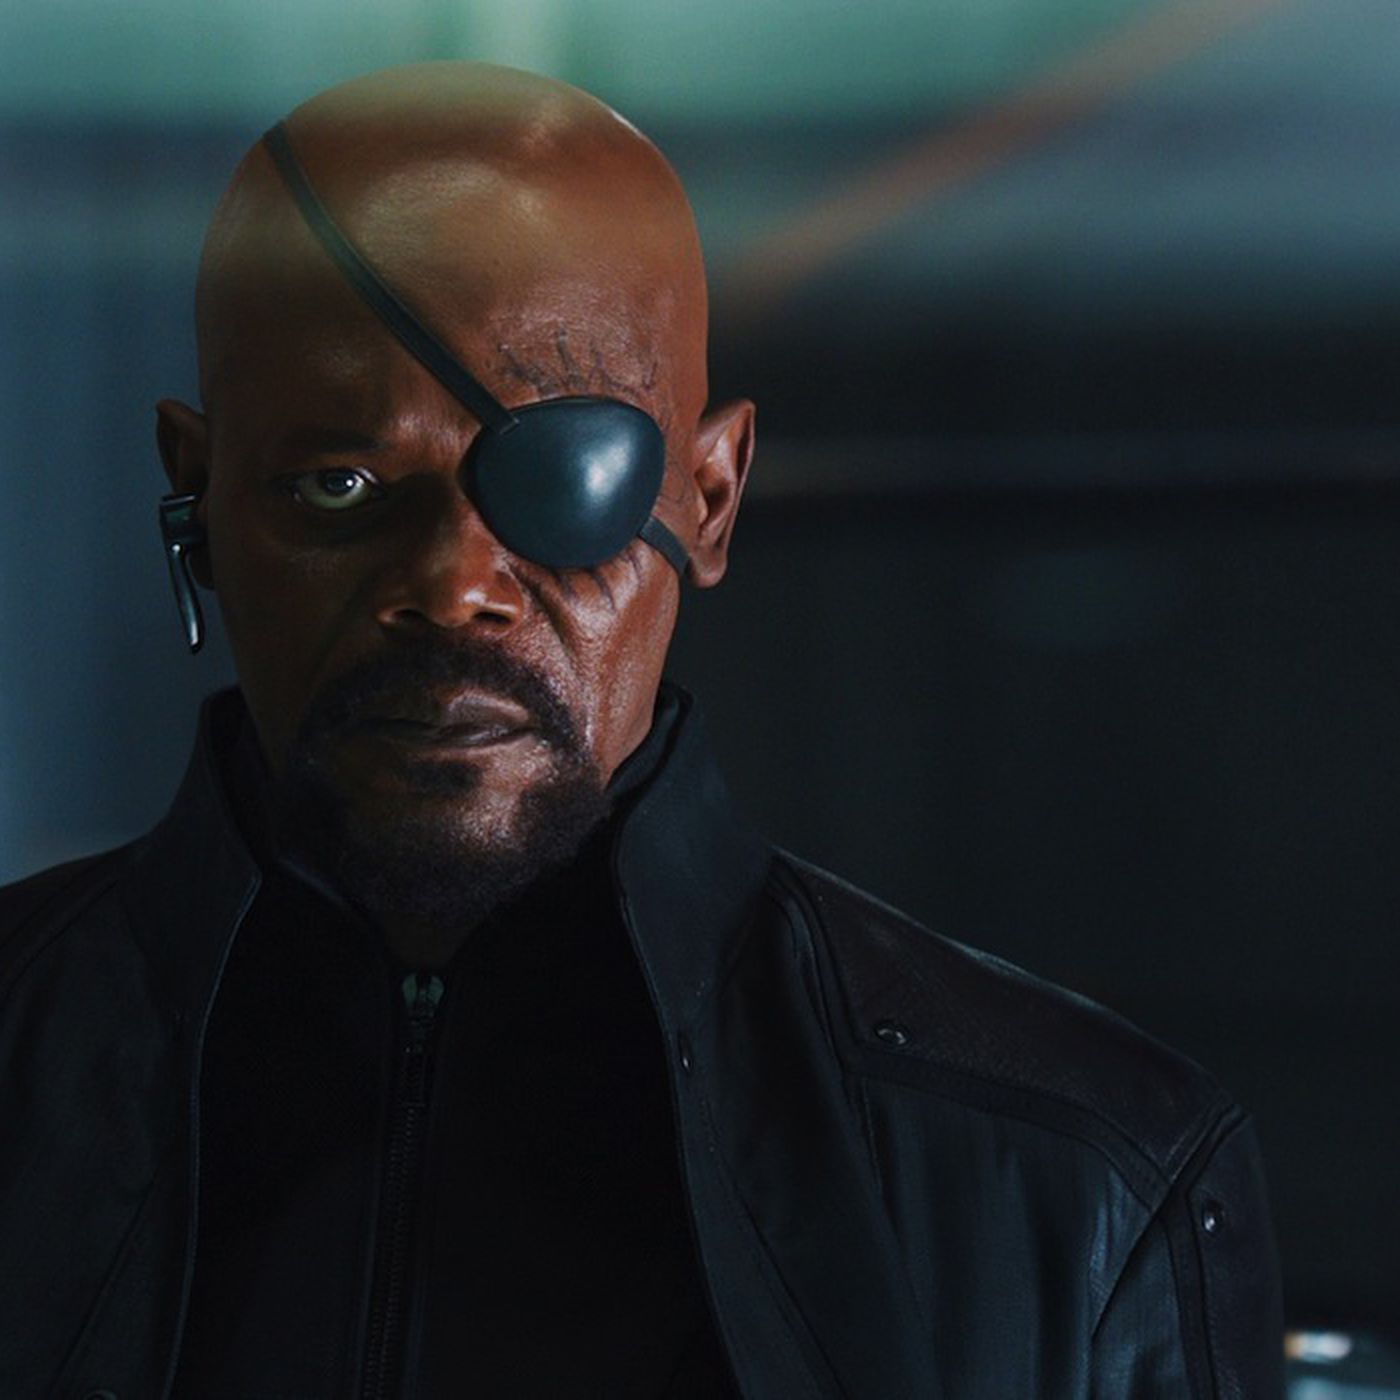 Captain Marvel: new image reveal young Nick Fury, Skrulls, villain